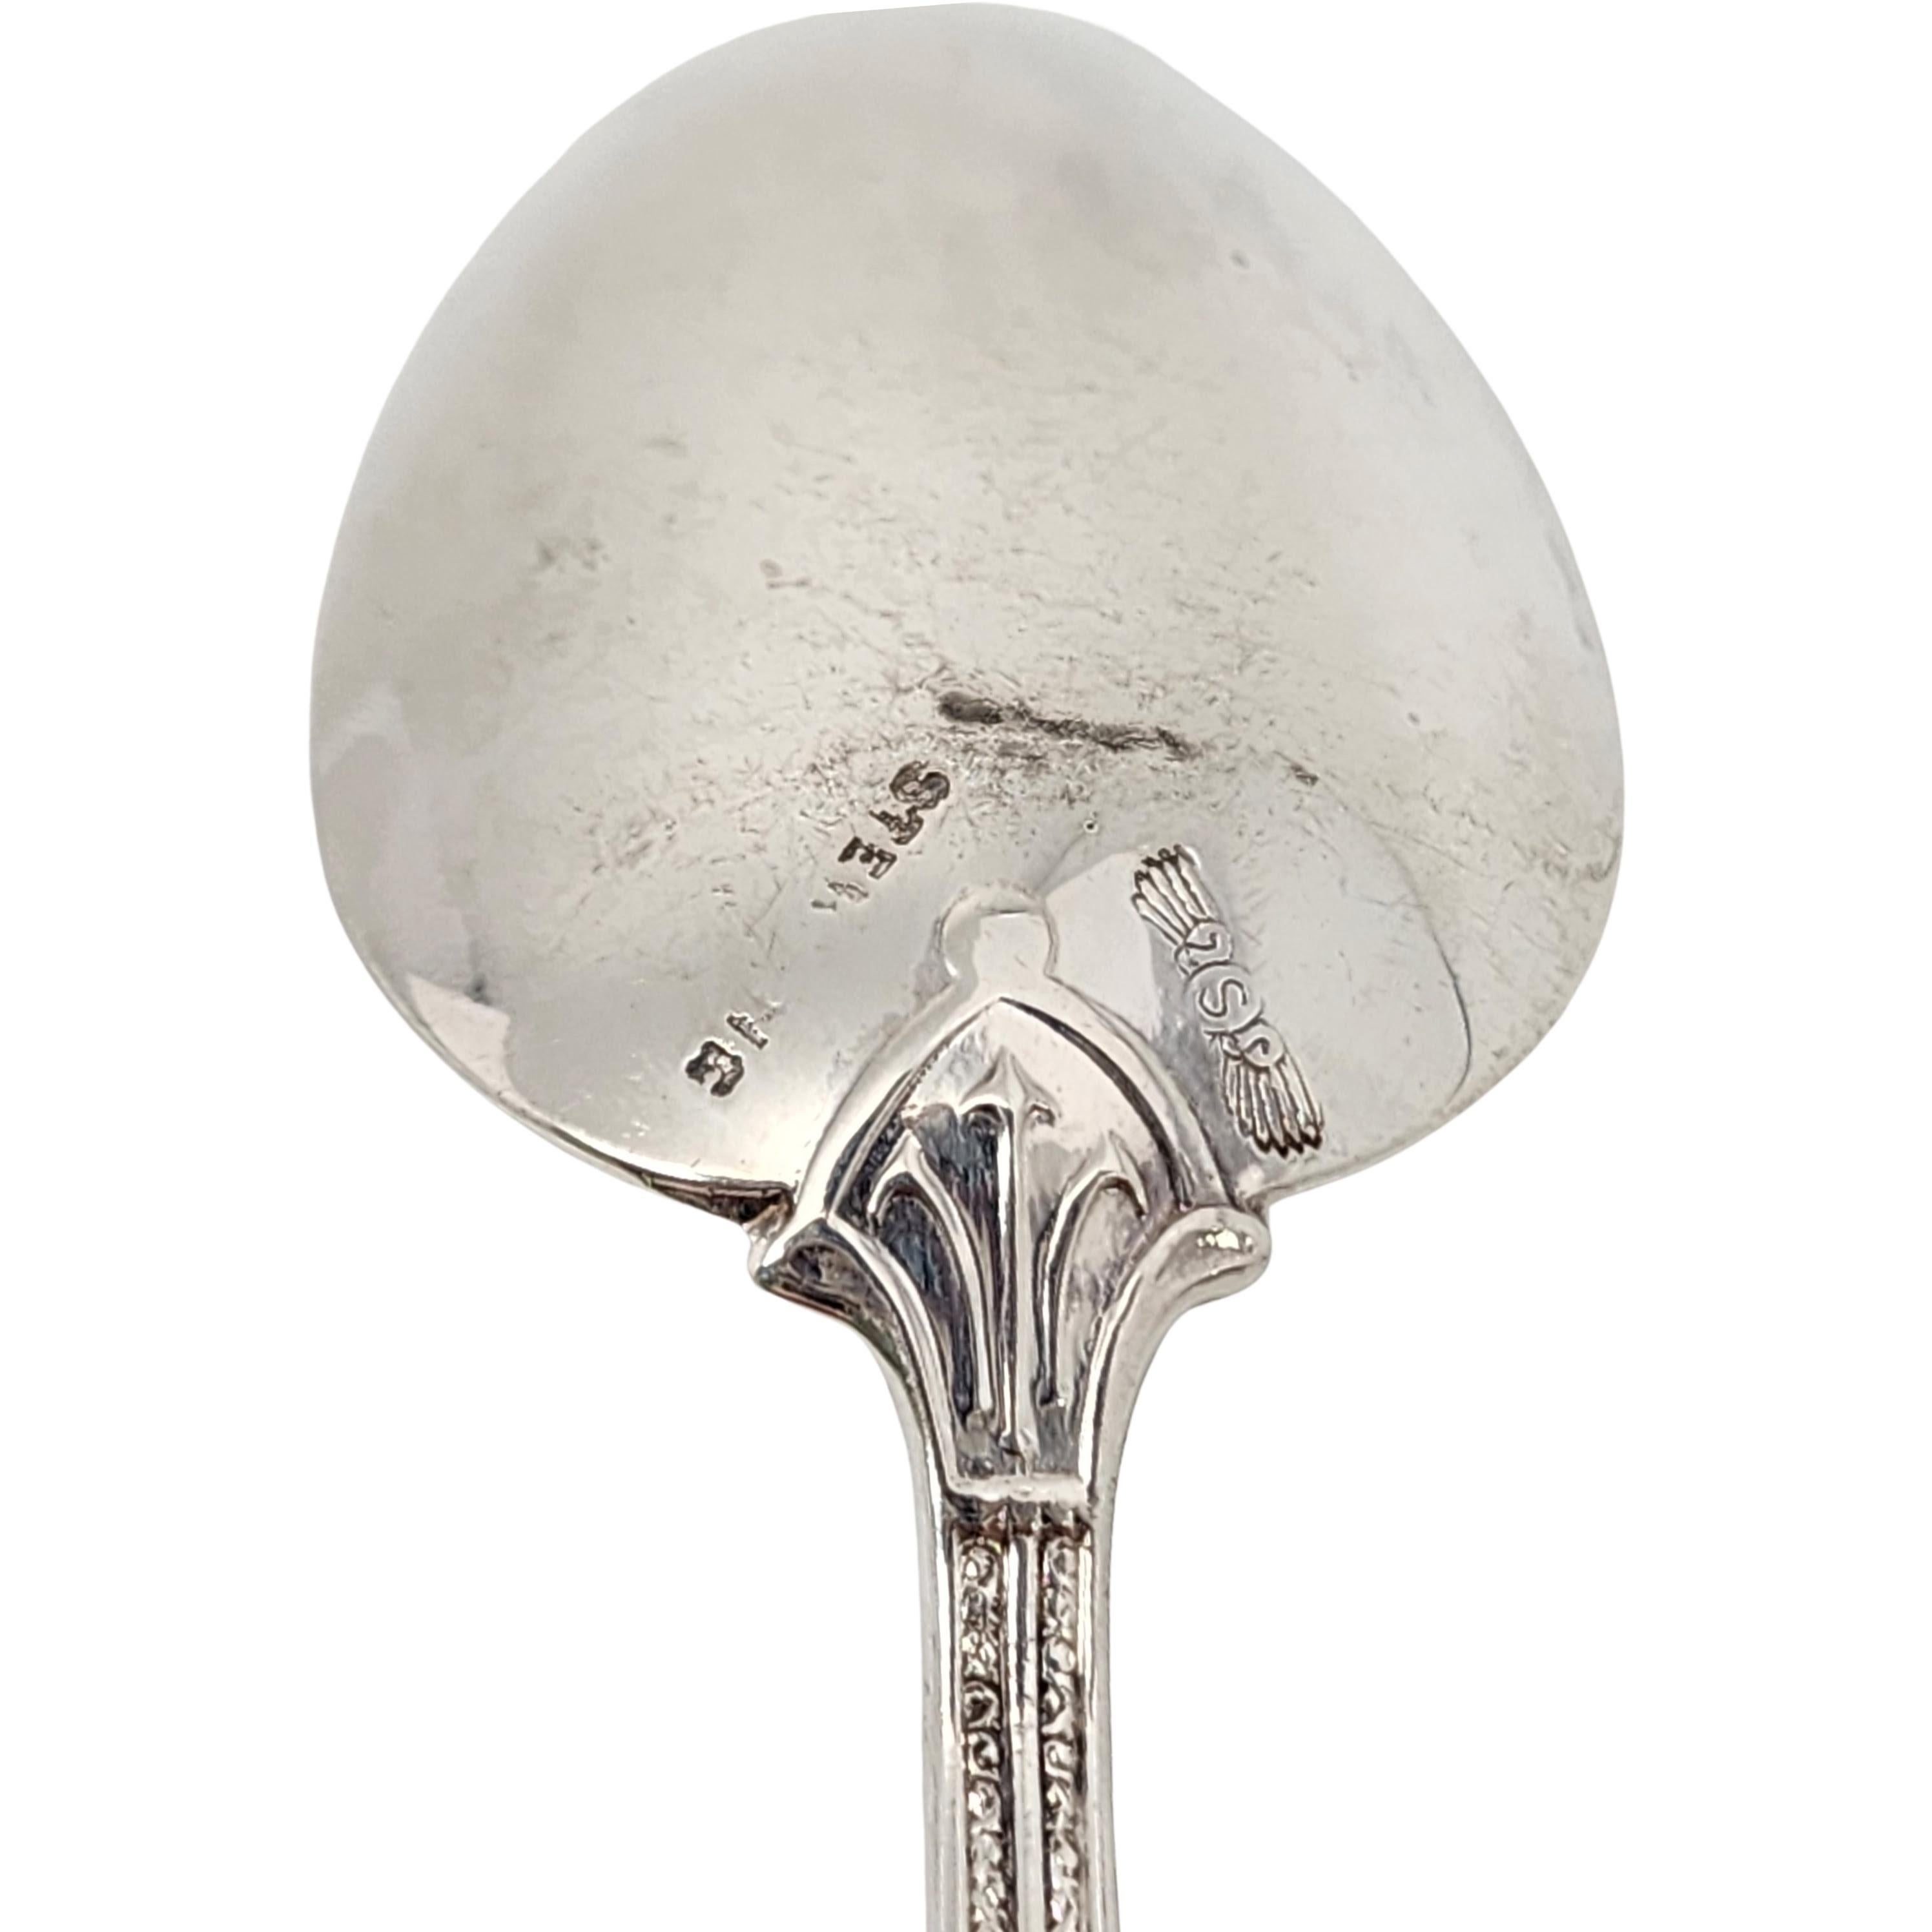 Set of 12 George Shiebler Sterling Silver Amaryllis Teaspoons w/Engraving #15844 For Sale 5